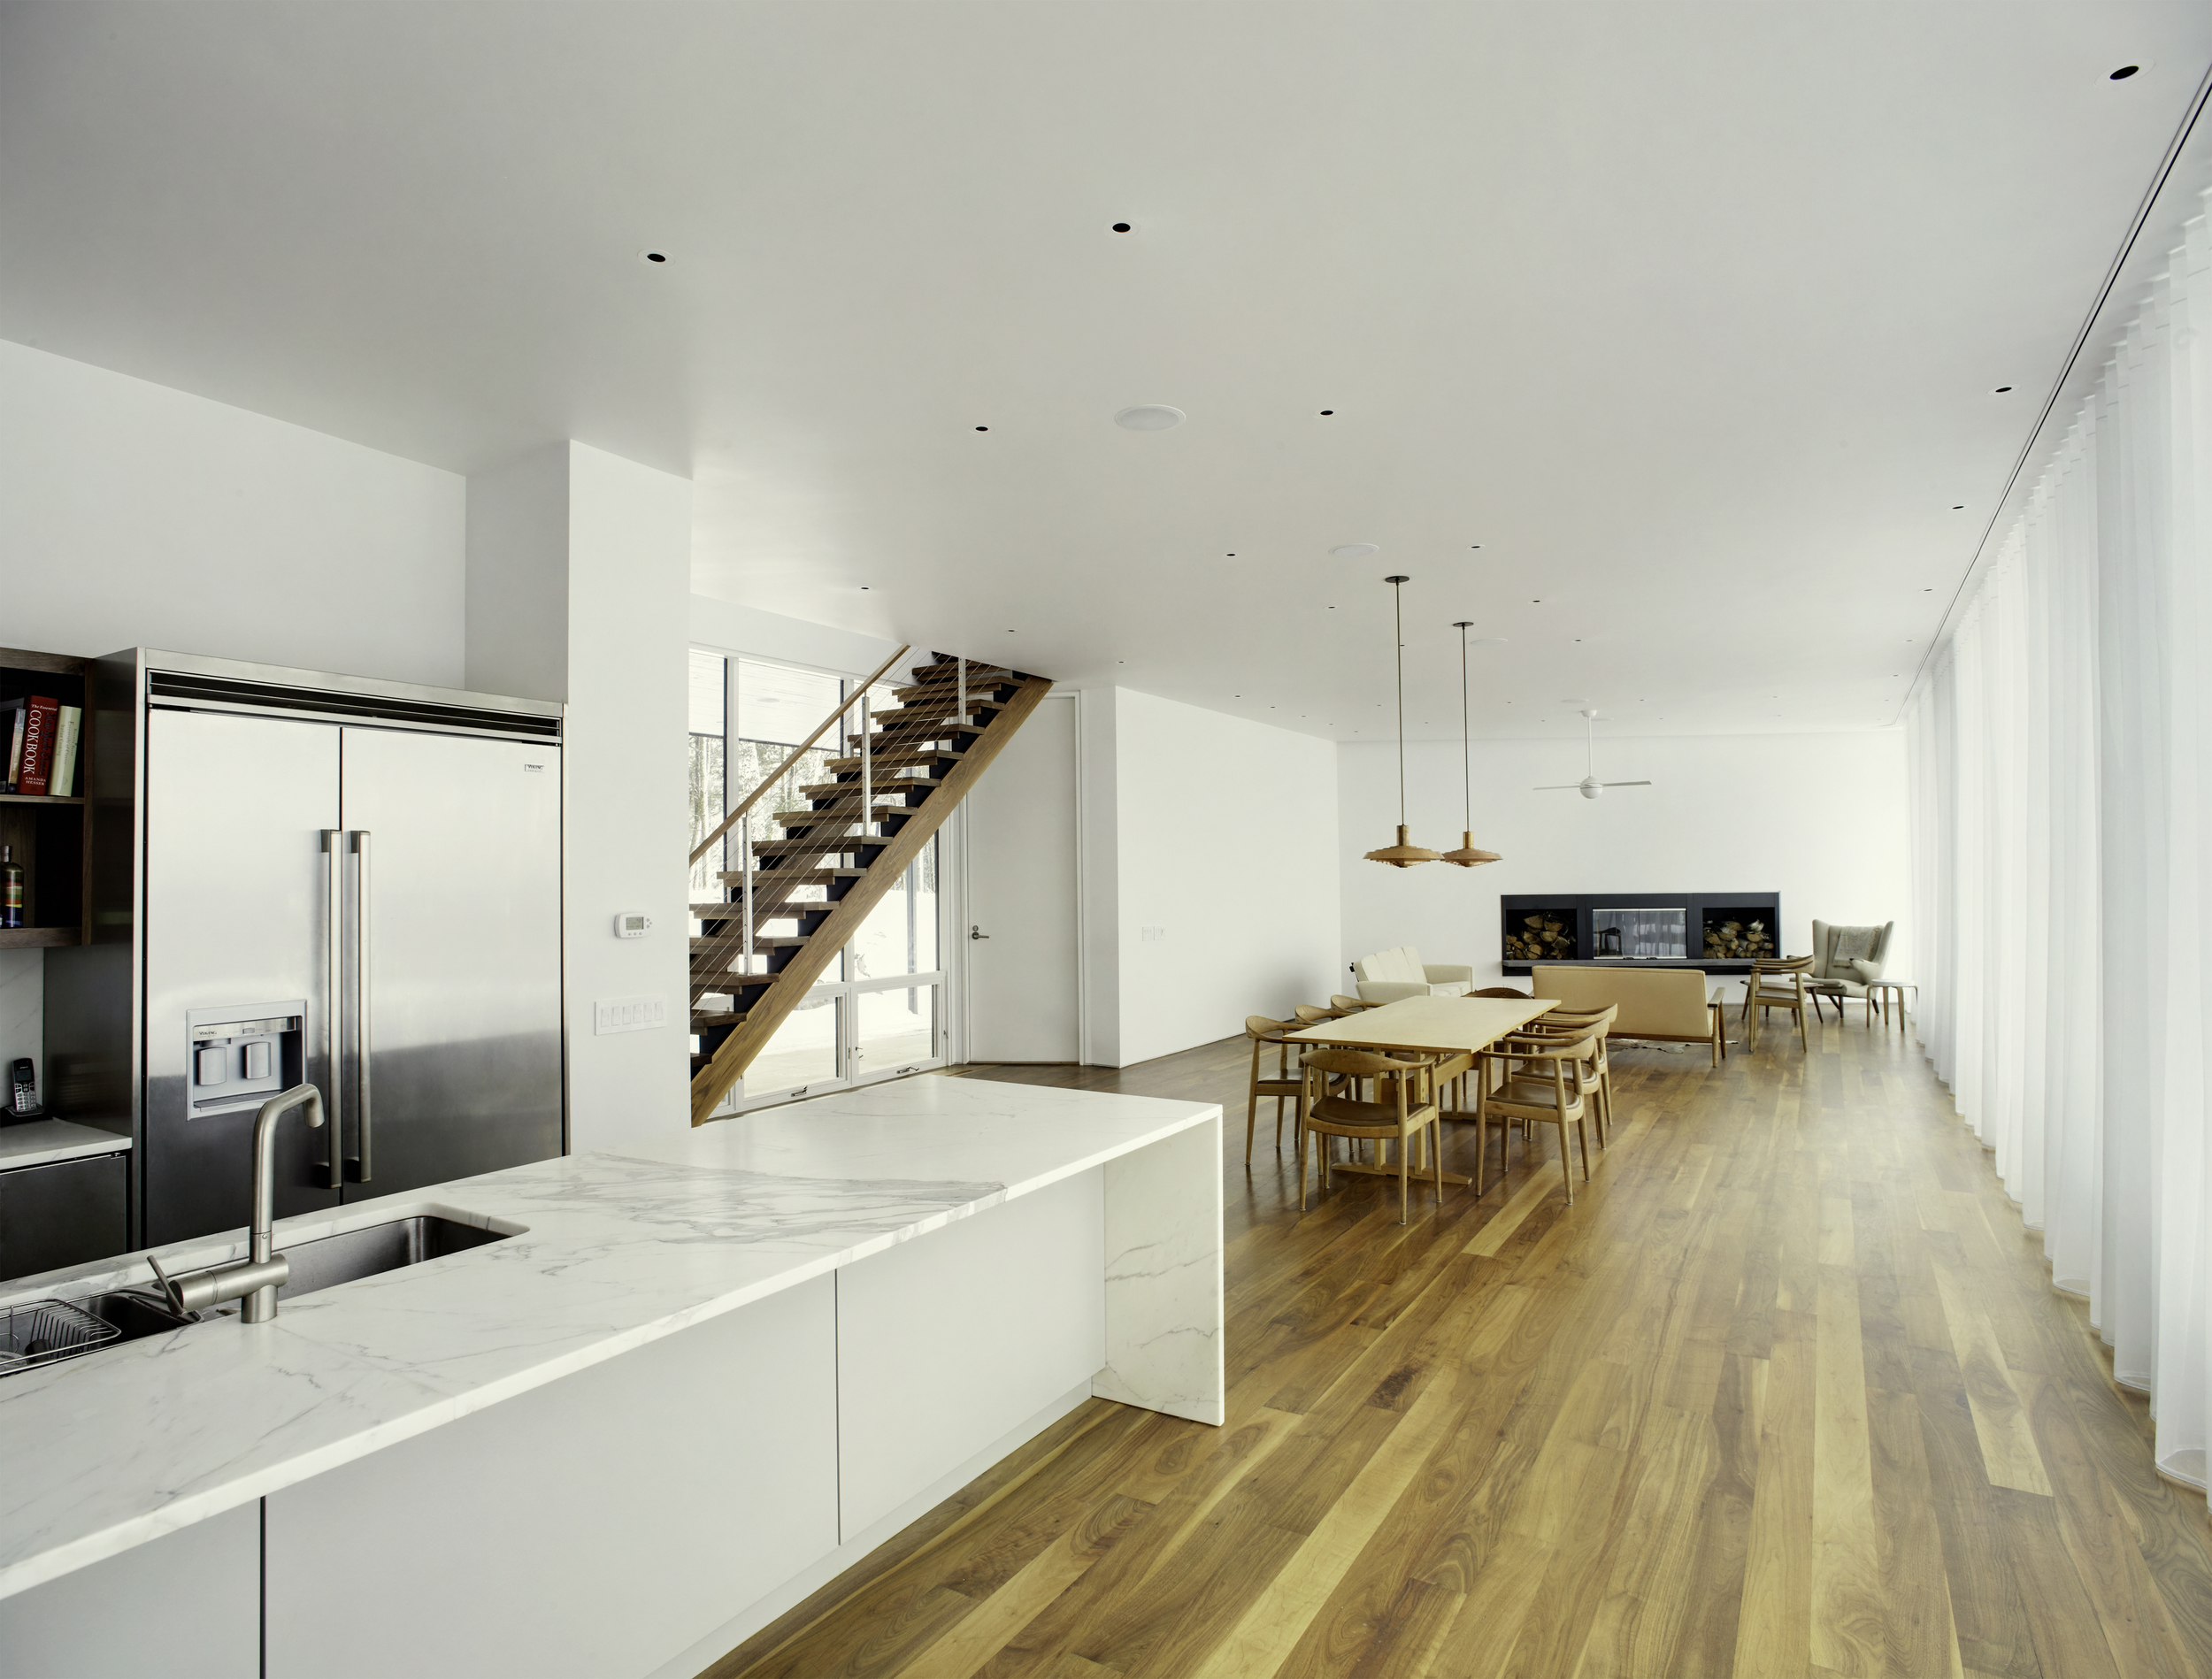 wood floors marble countertops stainless steel kitchen